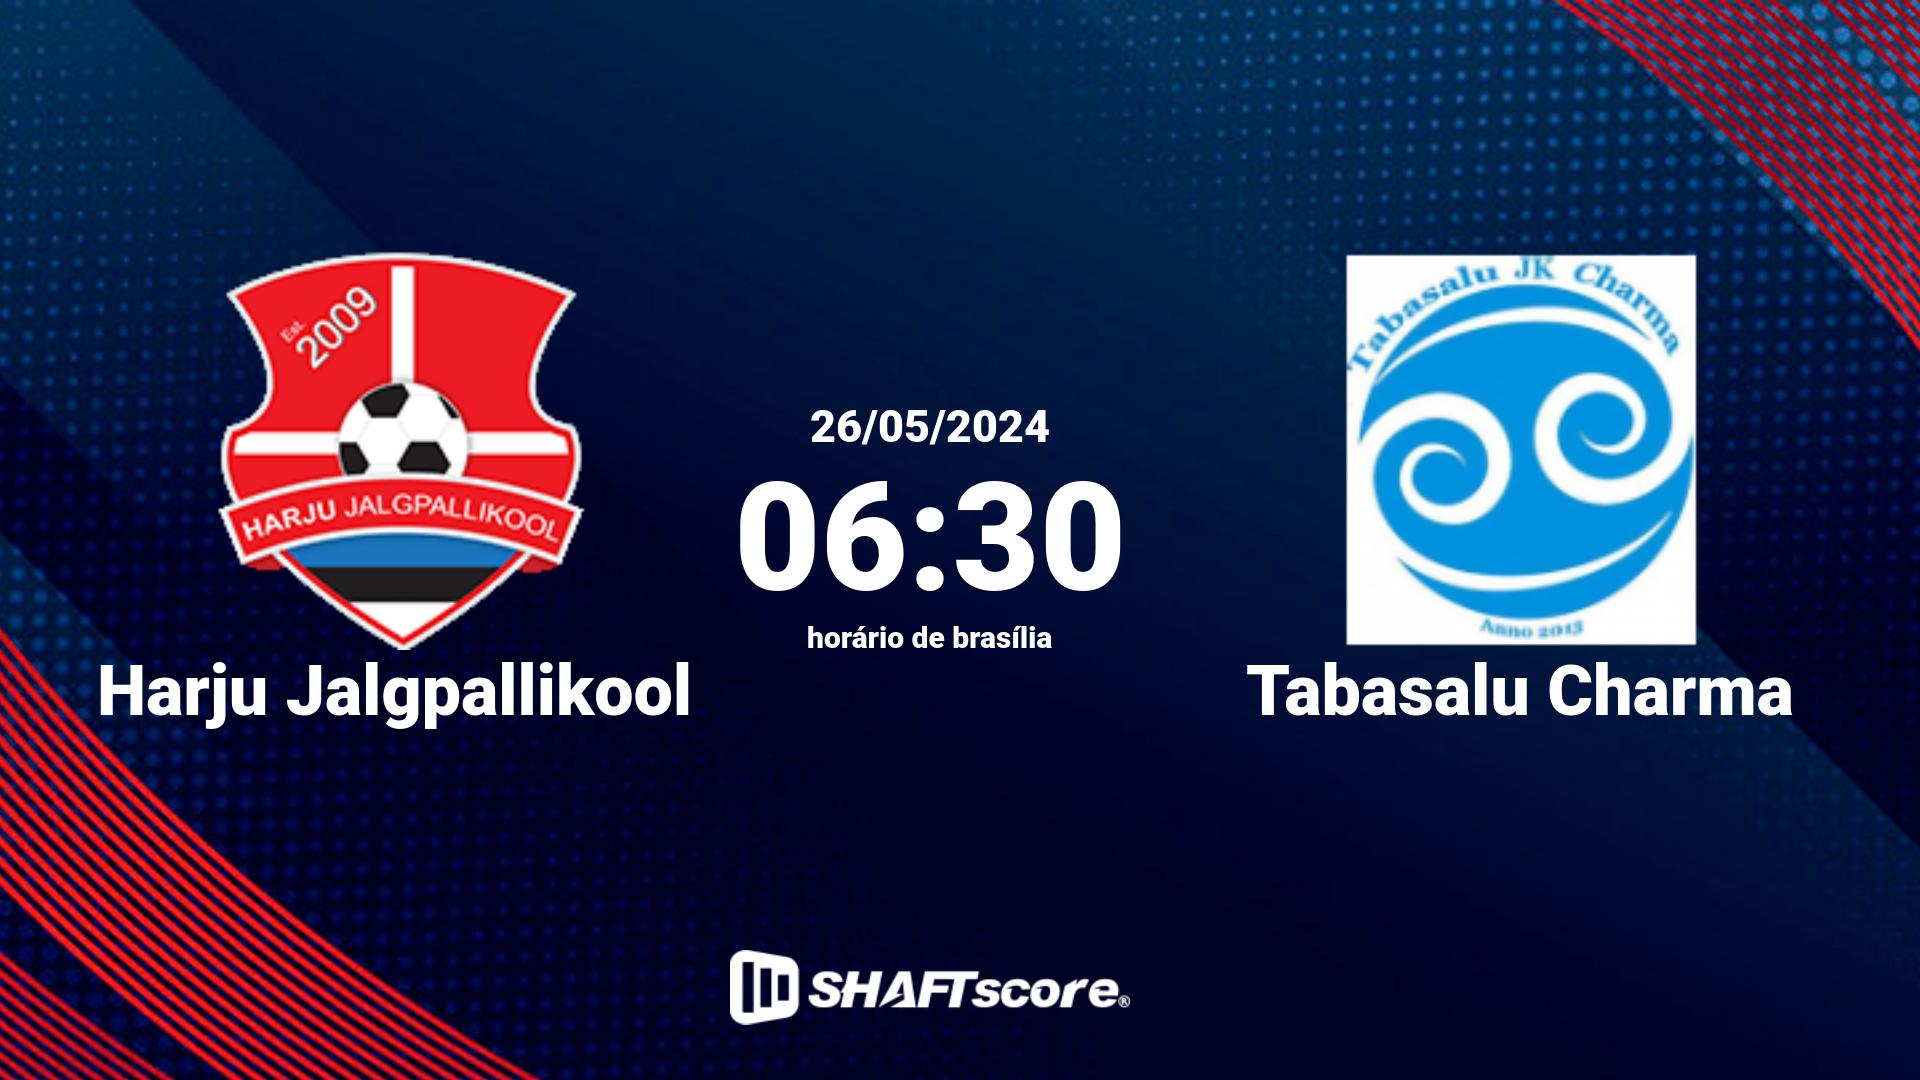 Estatísticas do jogo Harju Jalgpallikool vs Tabasalu Charma 26.05 06:30